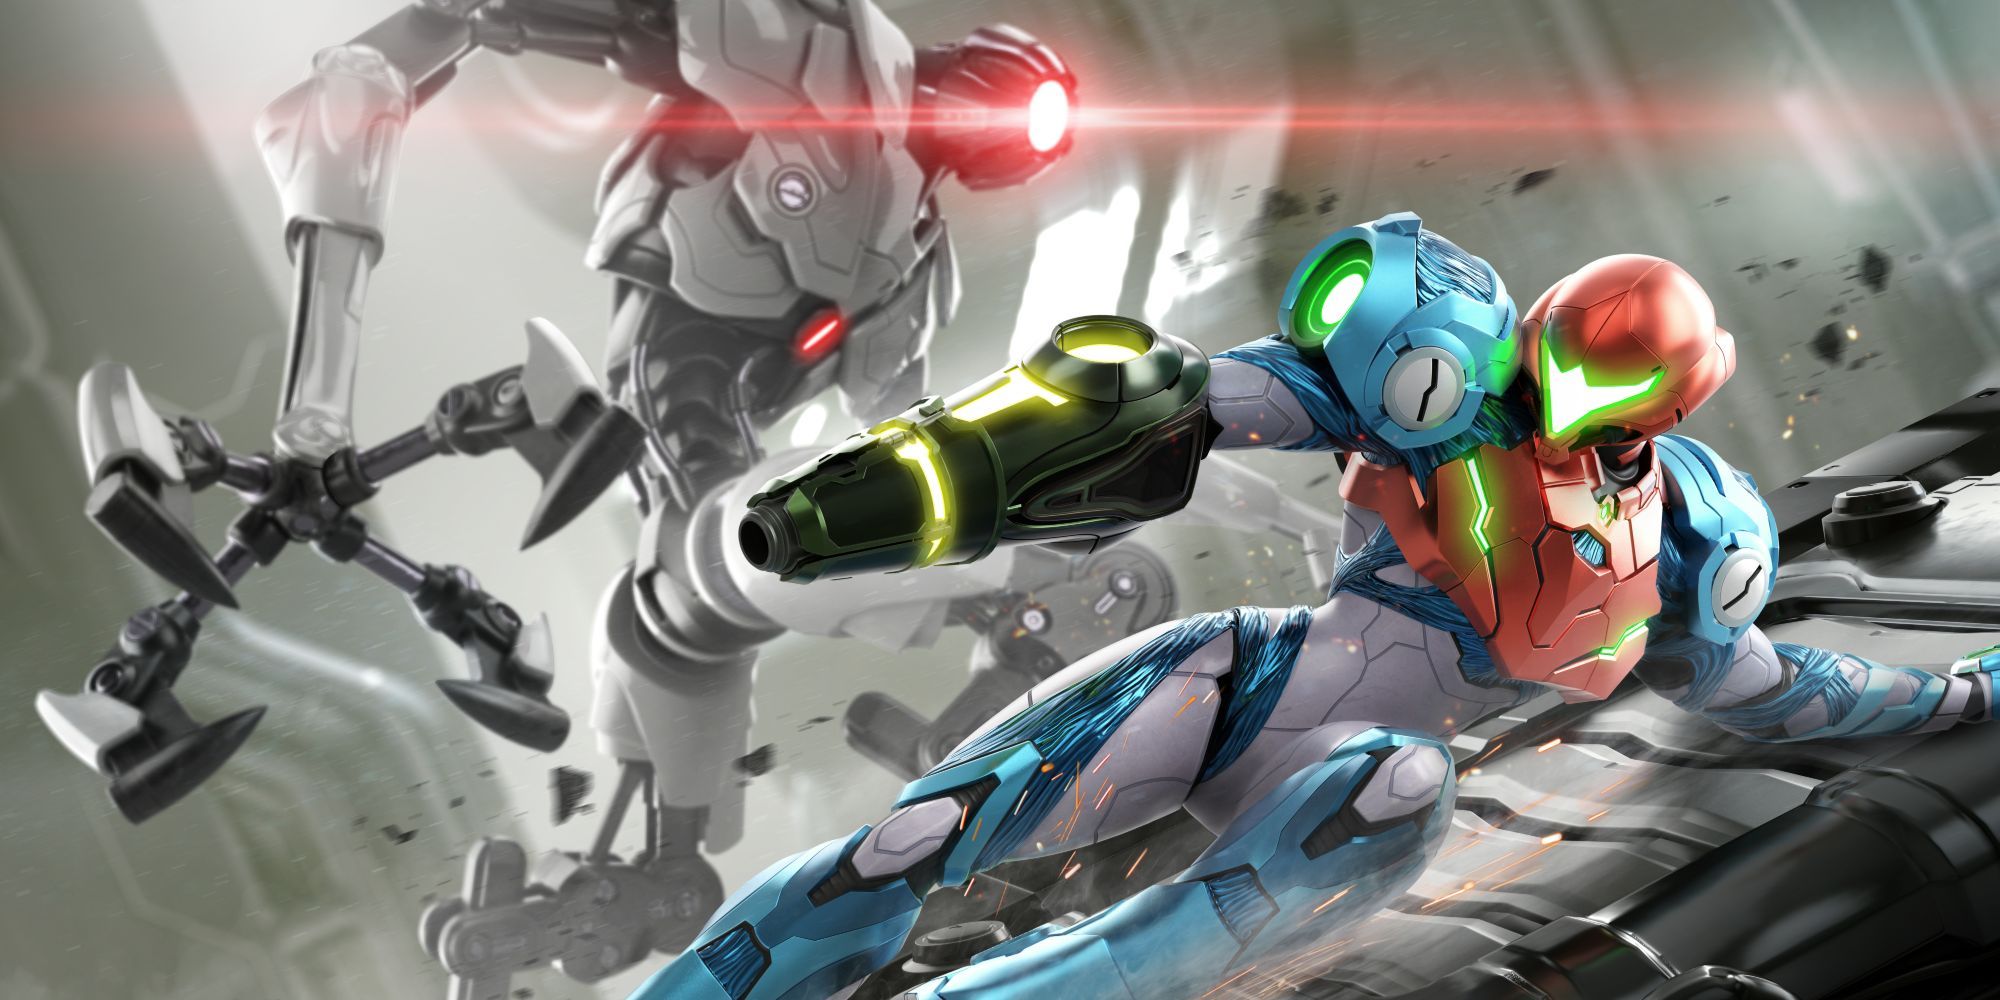 image from Metroid Dread showing Samus Aran fighting an E.M.M.I. robot